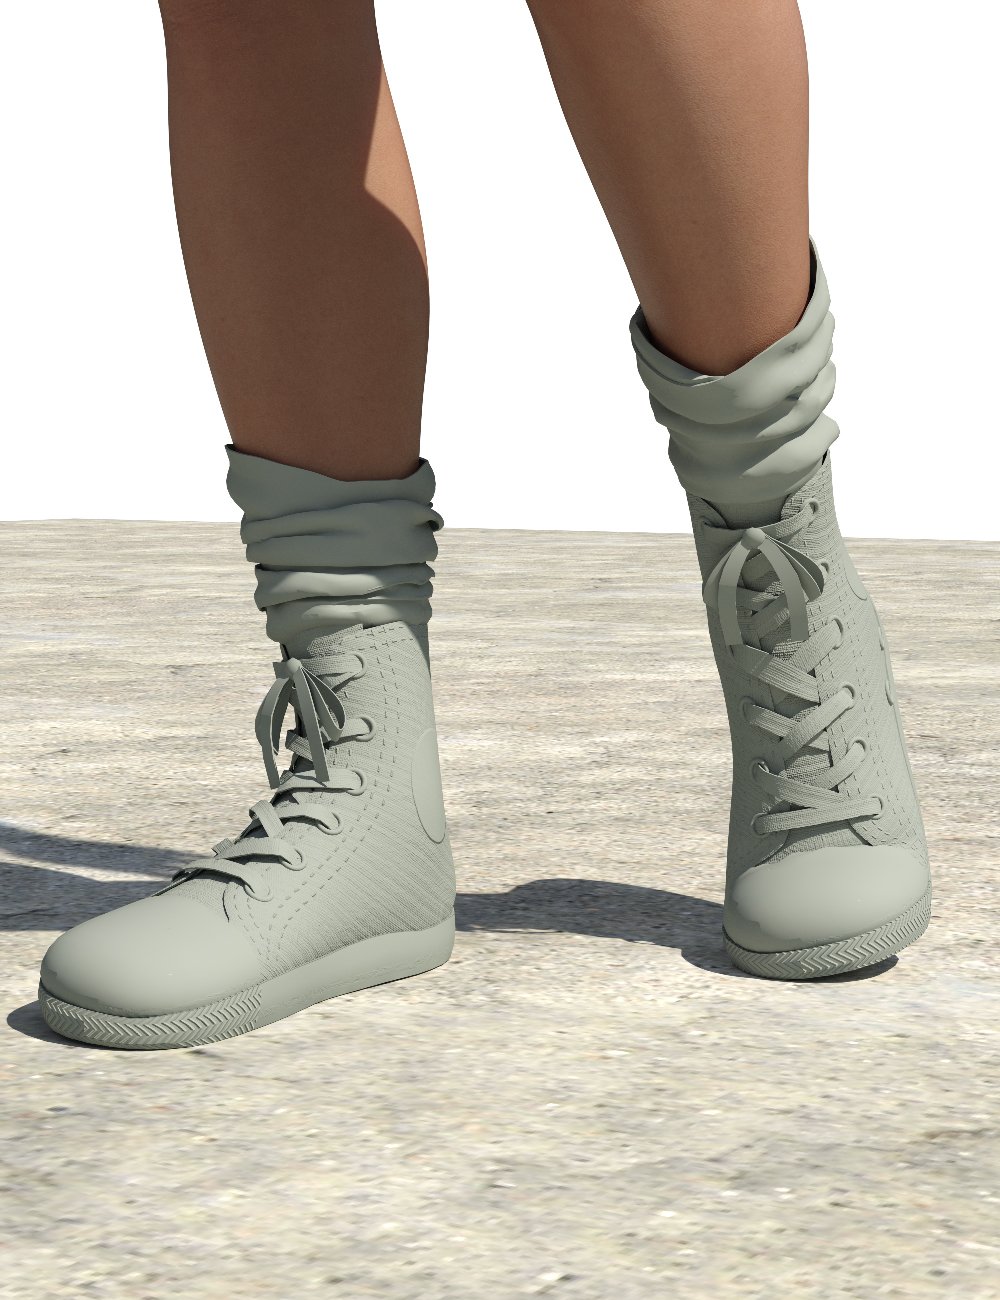 Hightop Chucks Sneakers by: DarkEdgeDesign, 3D Models by Daz 3D